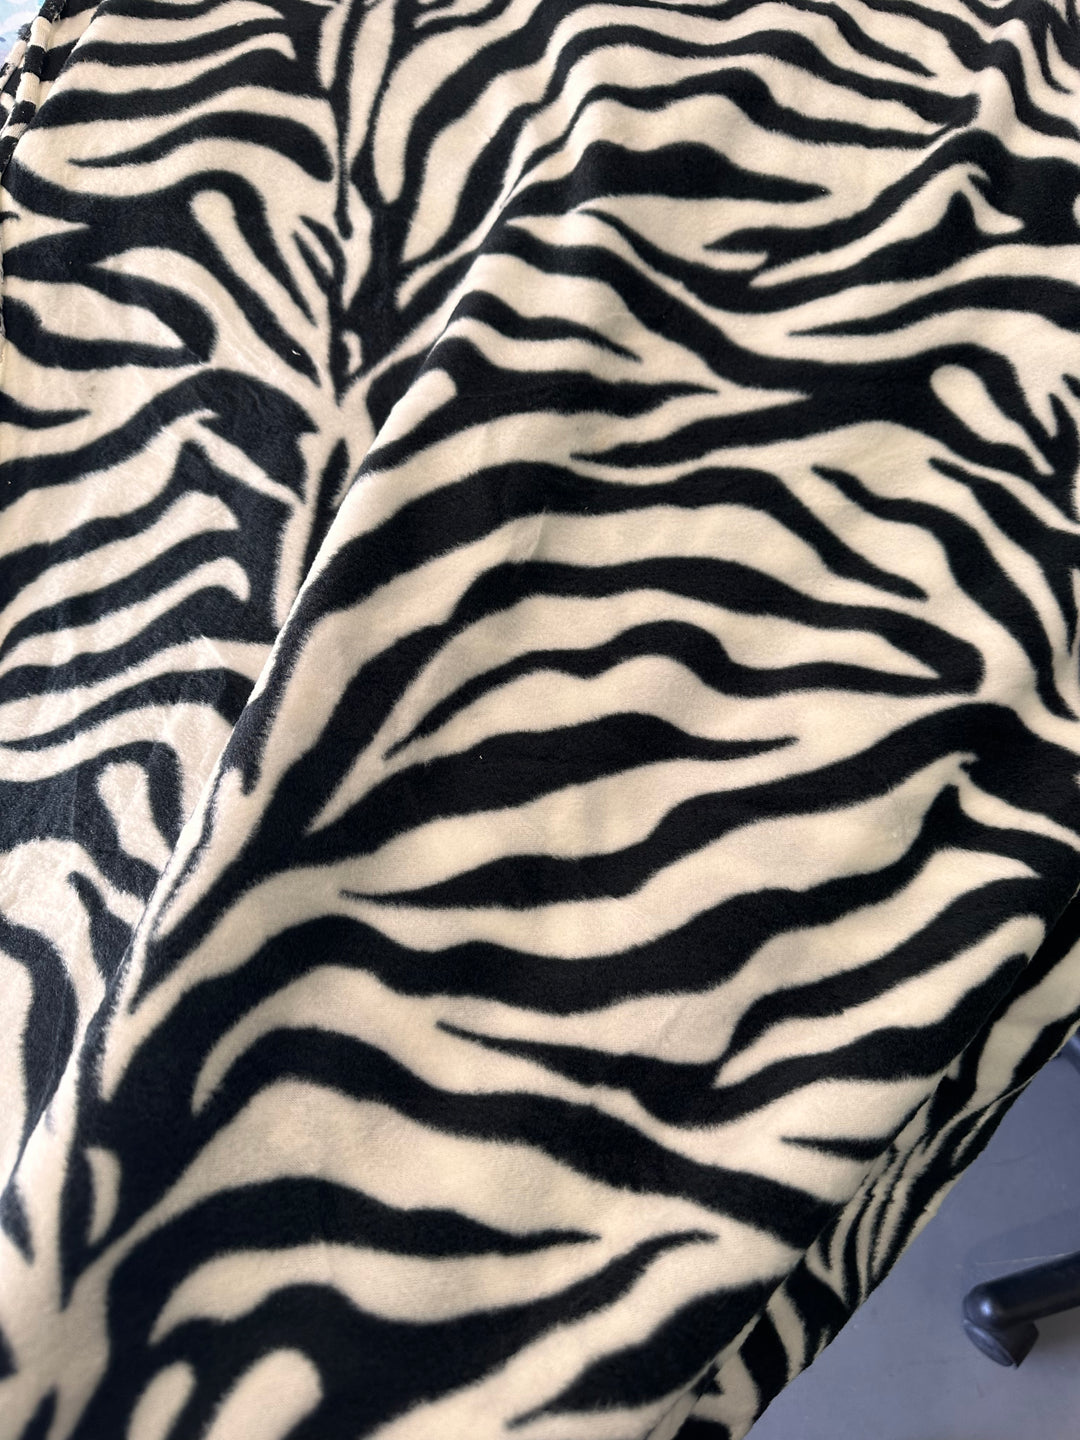 Zebra Print Fleece Fabric by the yard